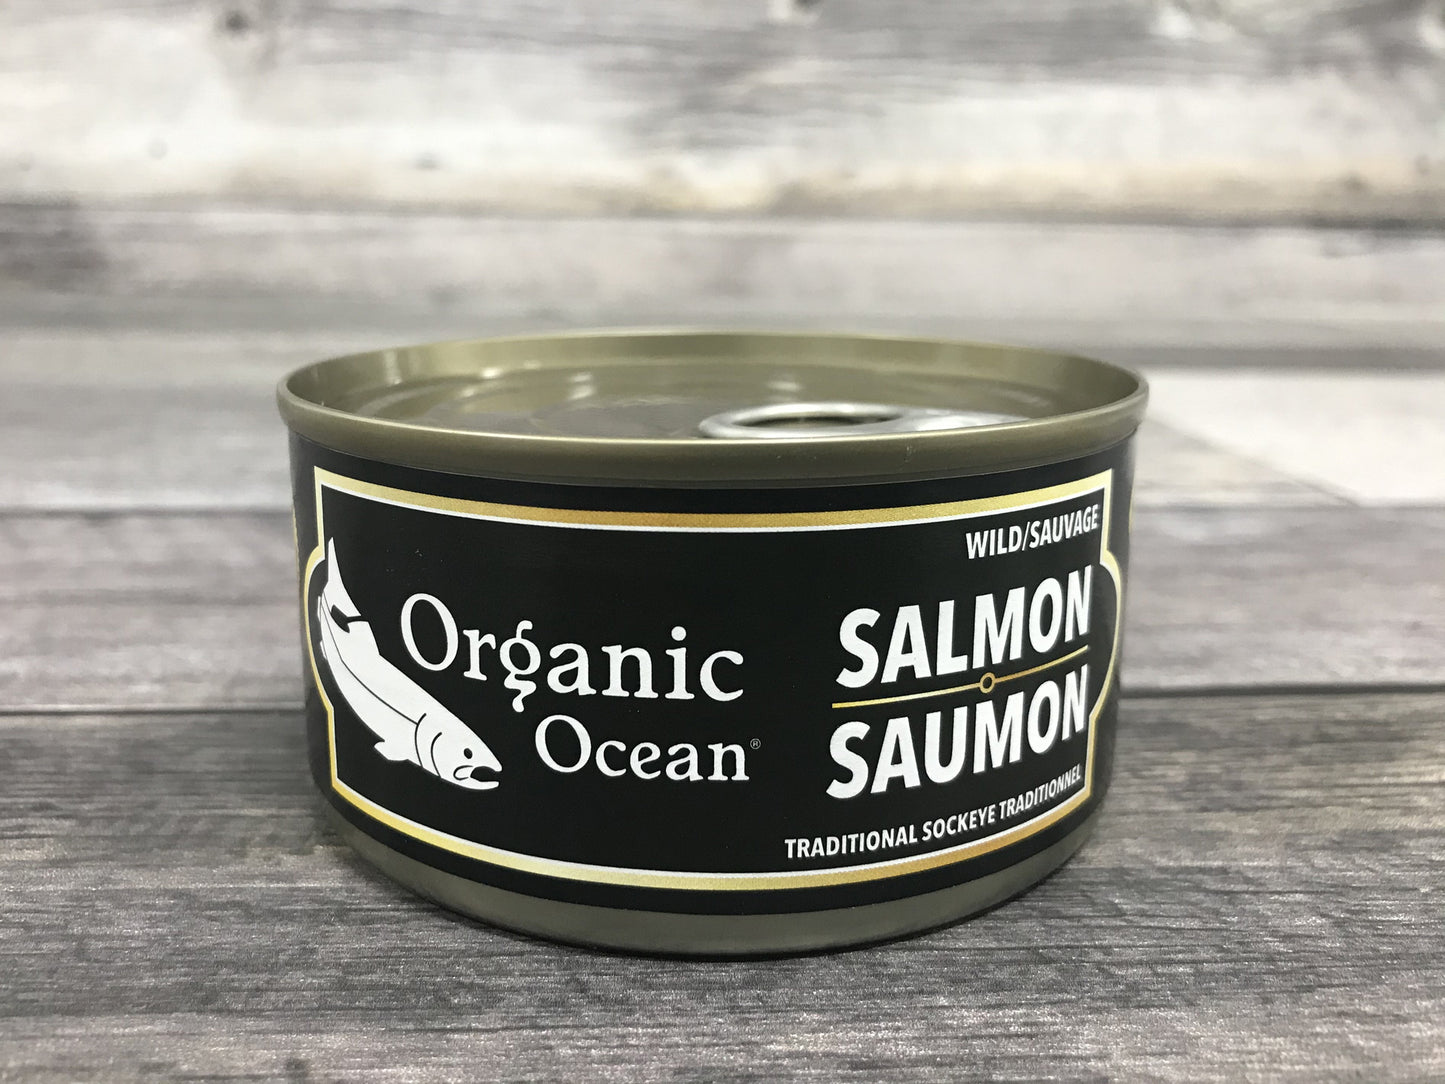 Wild Canned Sockeye Salmon (170g) - Dish The Fish